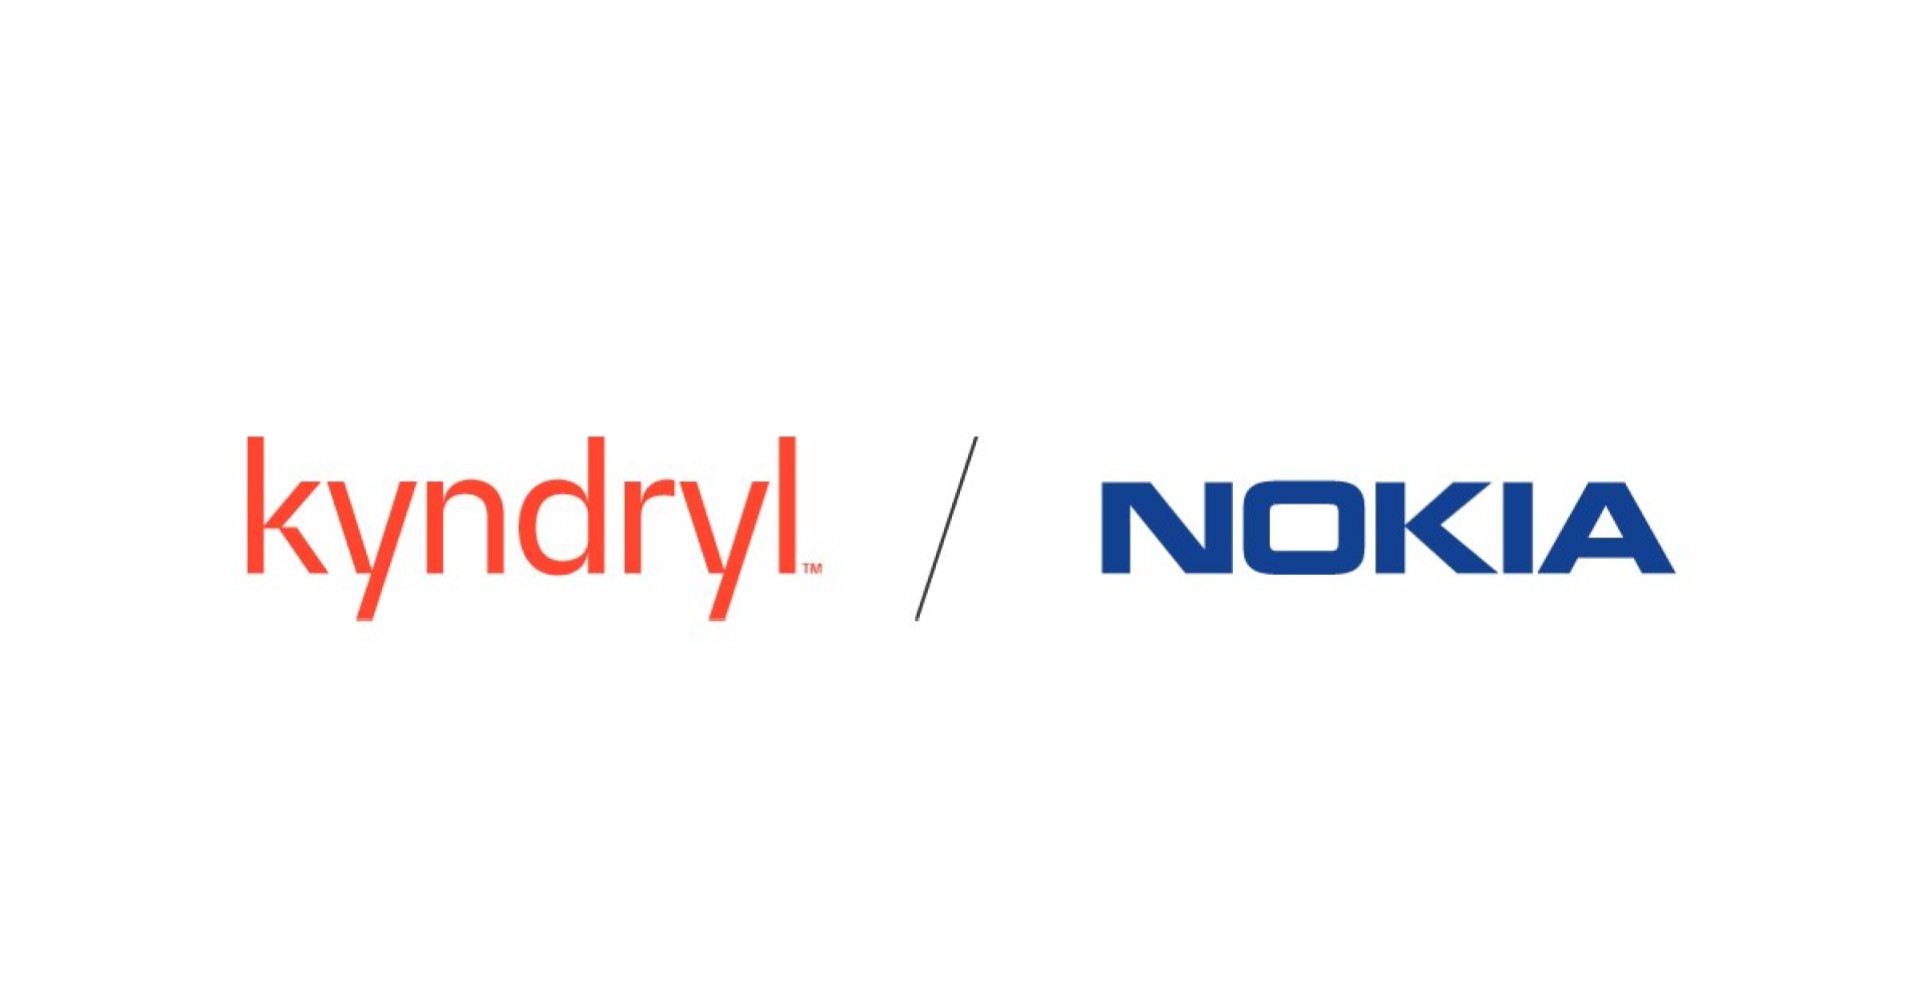 Nokia และ Kyndryl ขยายความร่วมมือพัฒนาโรงงานอัตโนมัติด้วย 5G ไปอีก 3 ปี